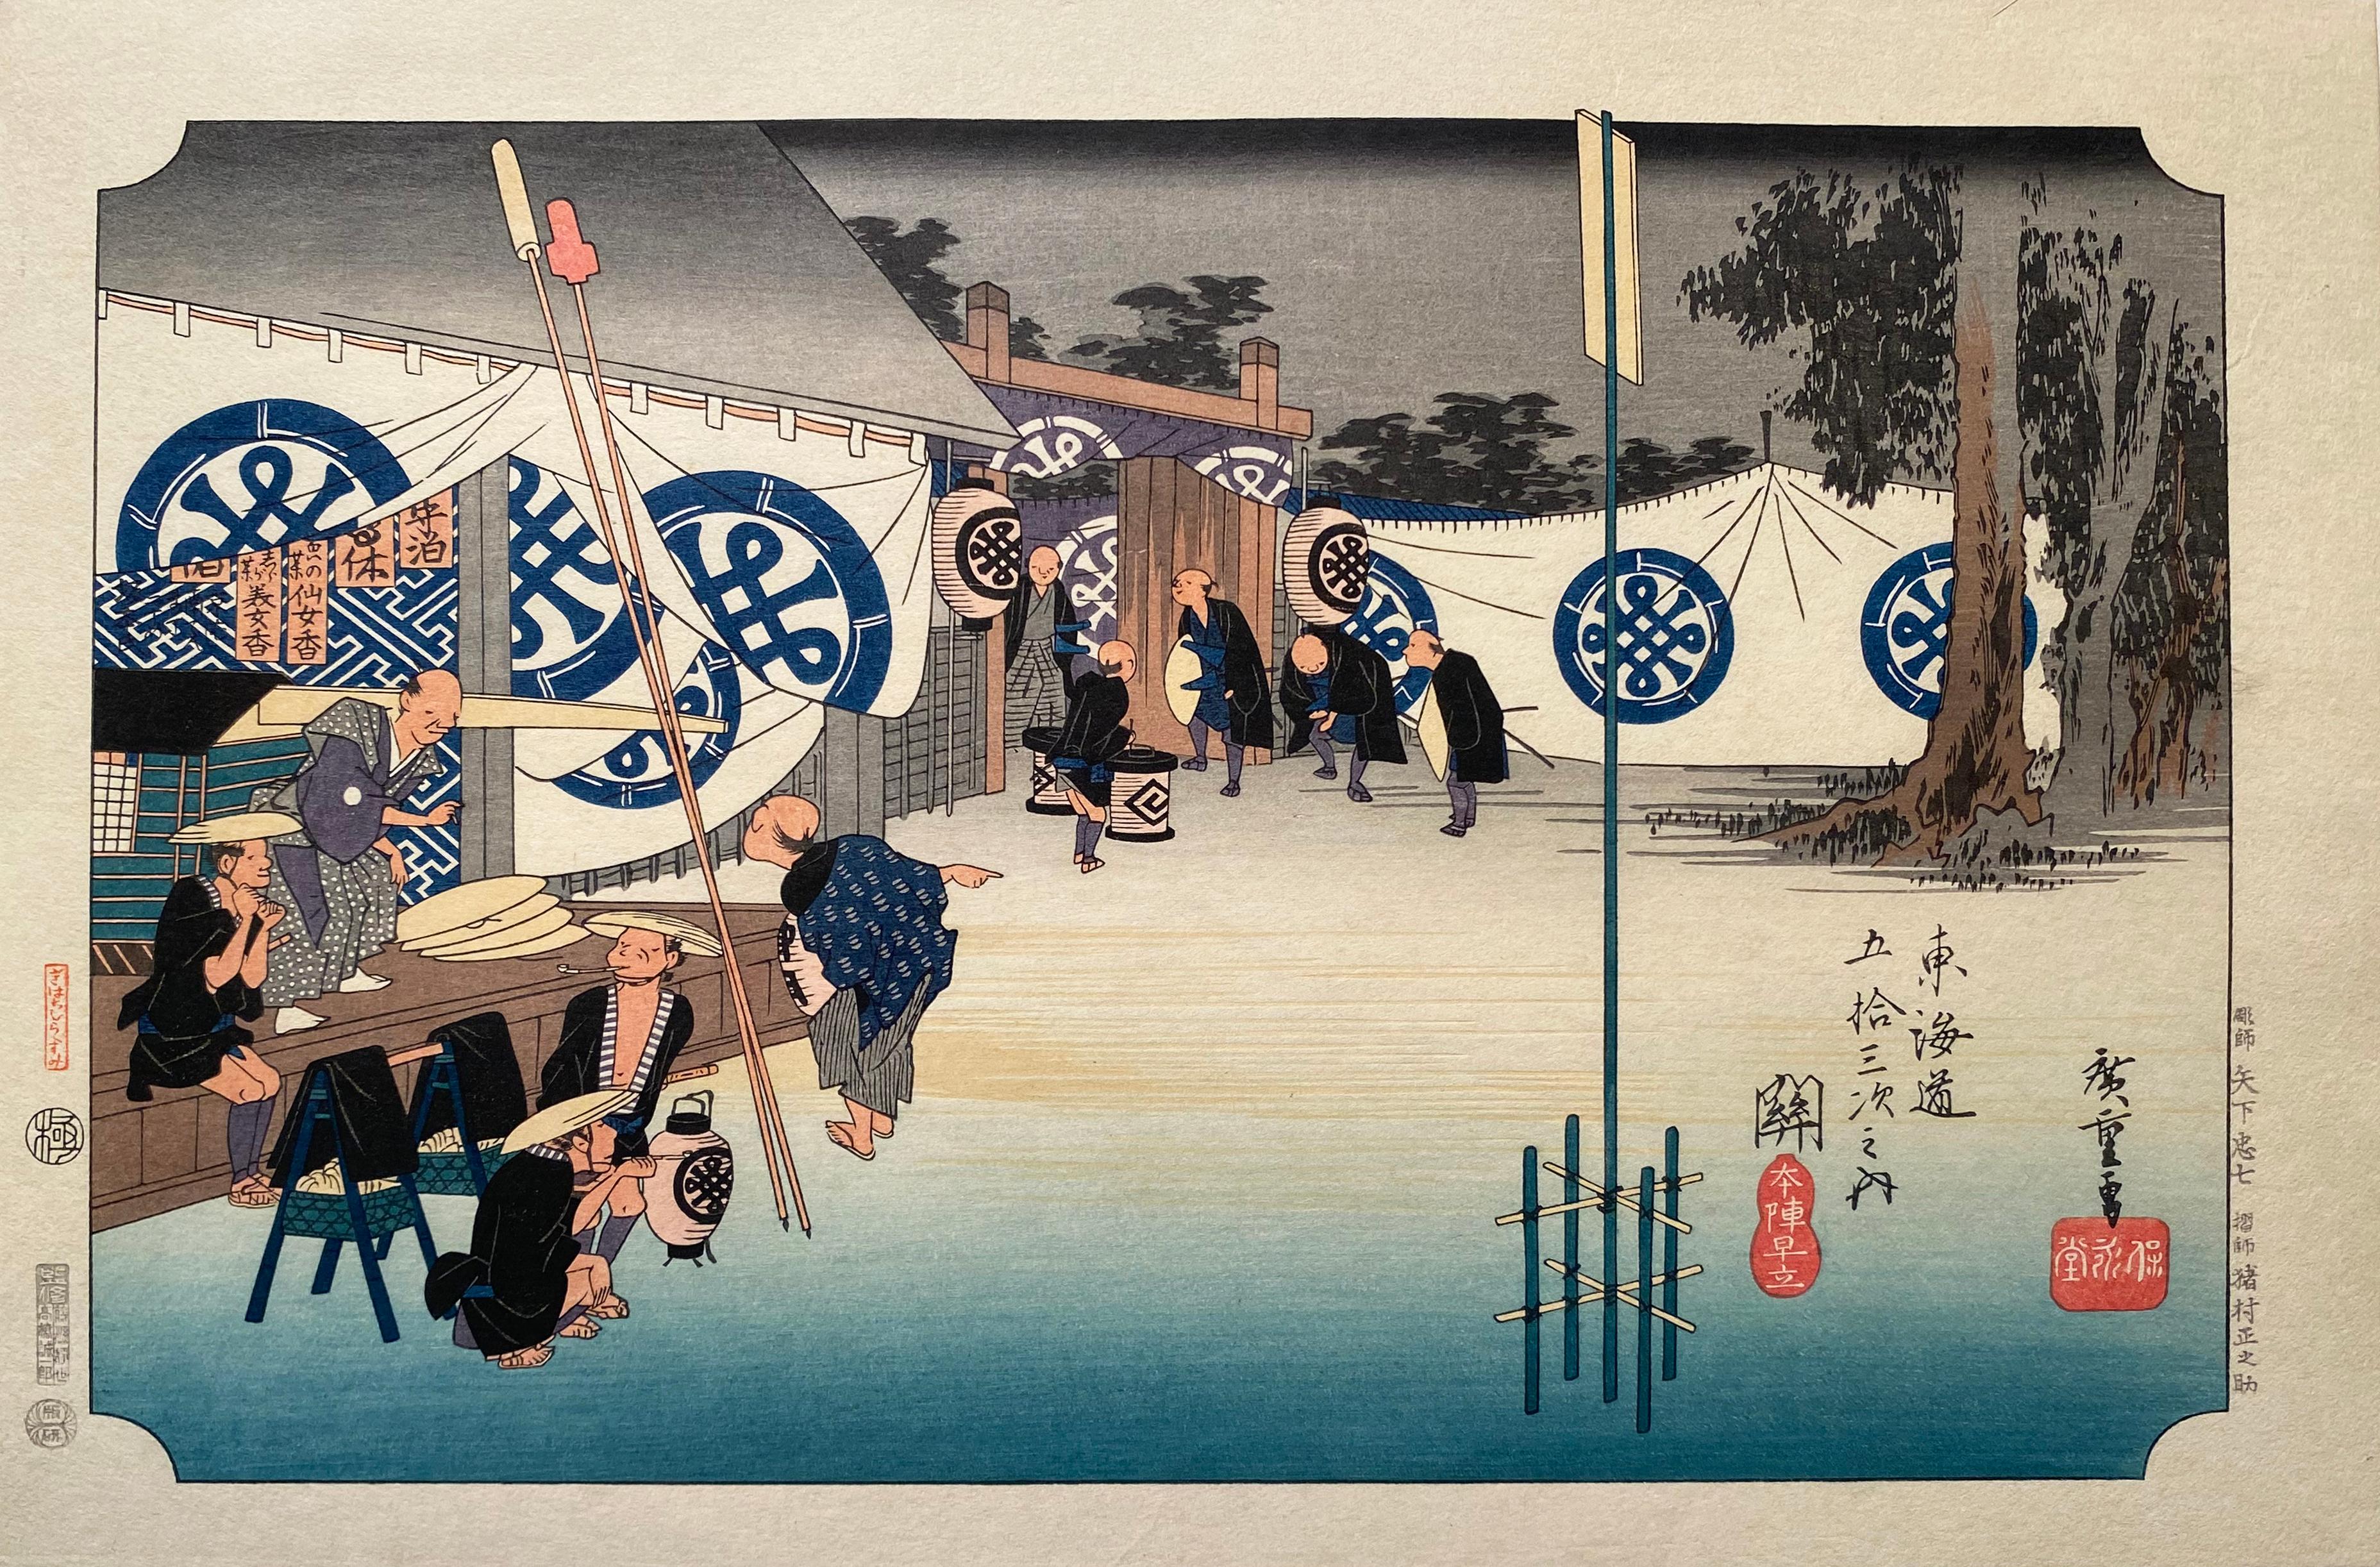 Utagawa Hiroshige (Ando Hiroshige) Landscape Print - 'View of Seki', After Utagawa Hiroshige 歌川廣重, Ukiyo-e Woodblock, Tokaido